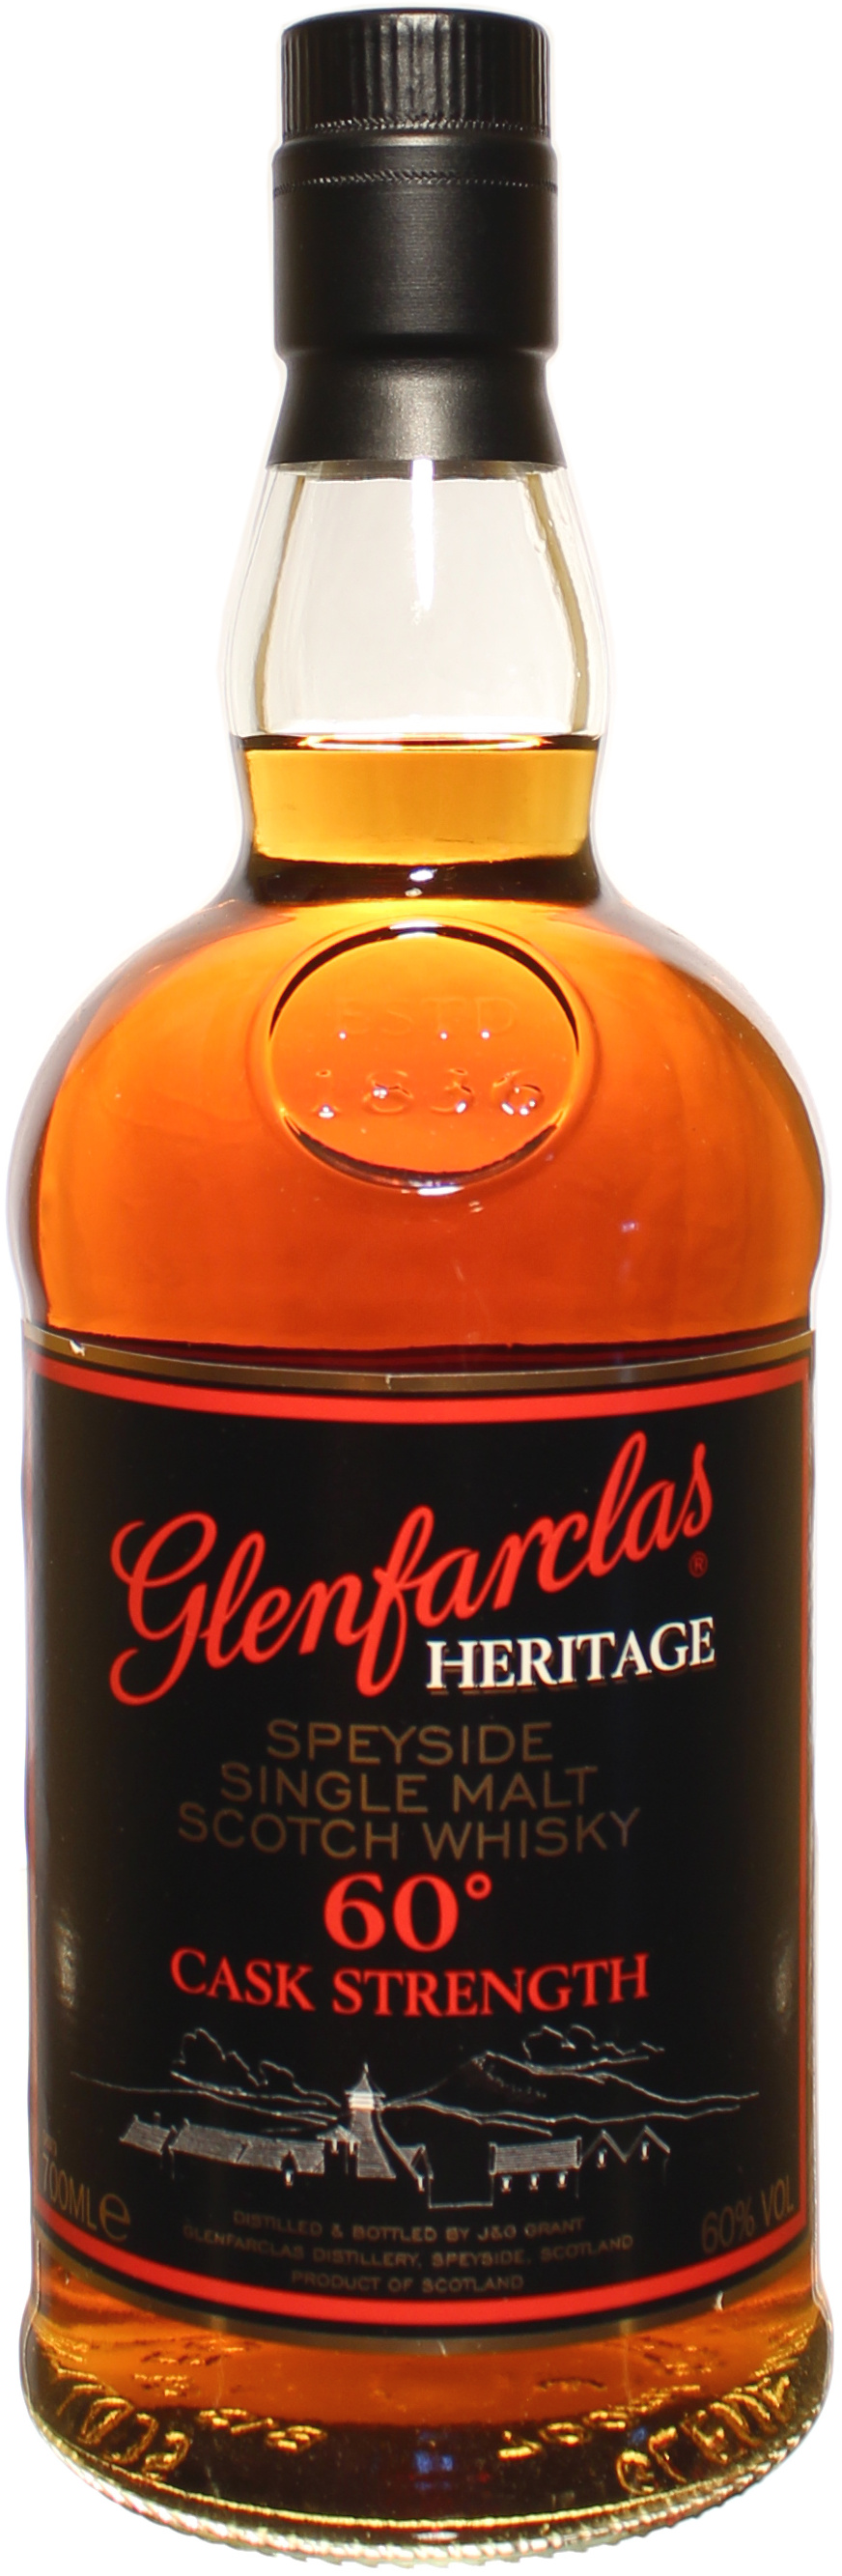 Glenfarclas Heritage Cask Strength 60% 0,7l